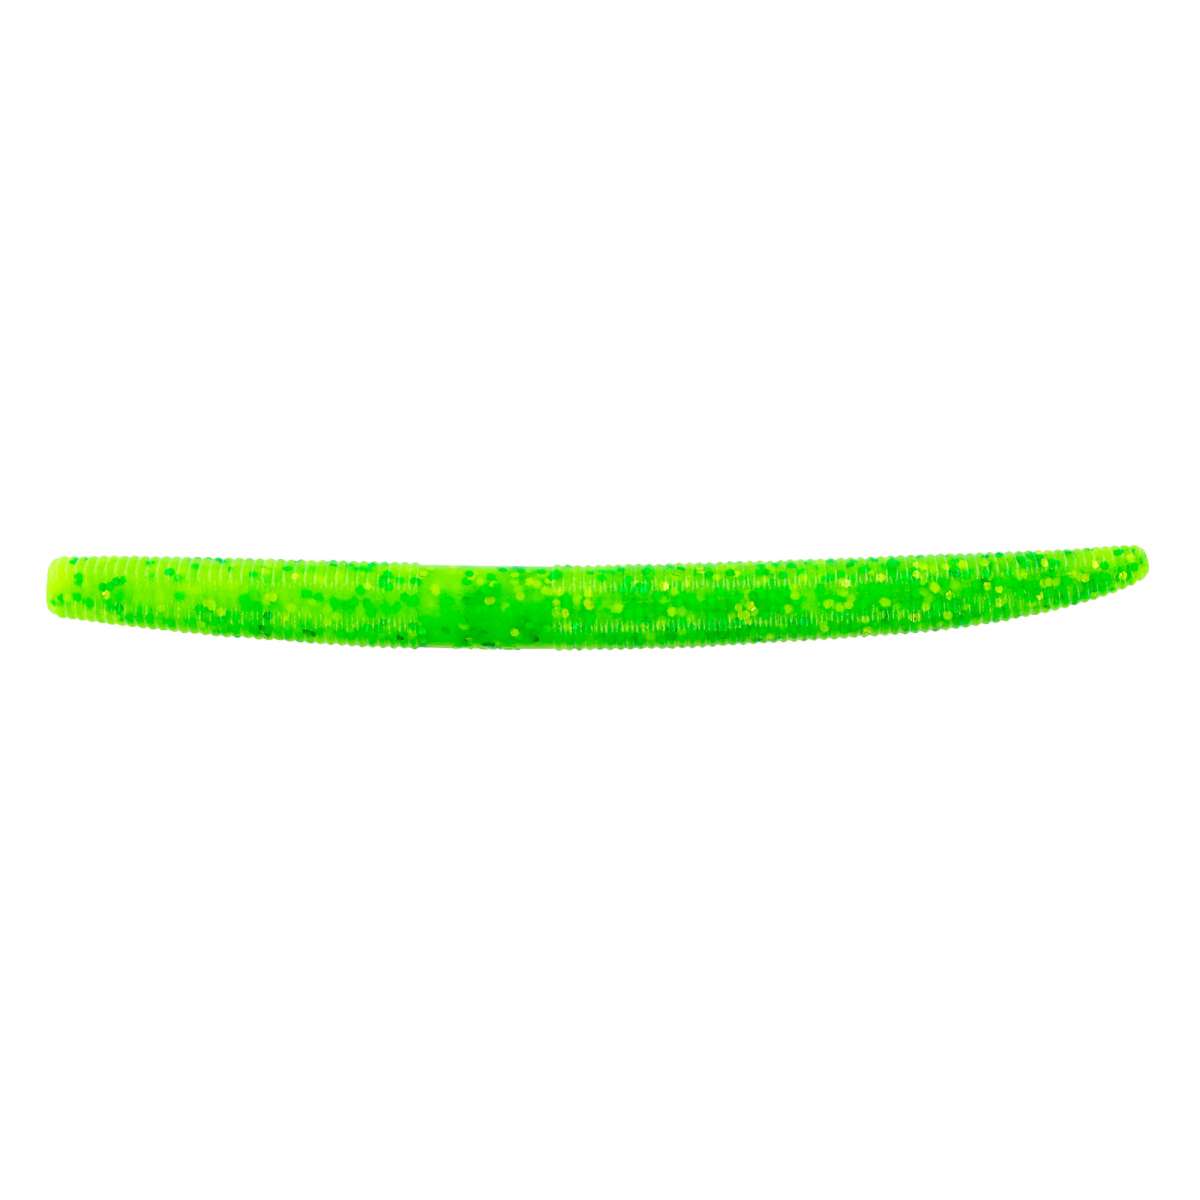 Chartreuse/Green Flake